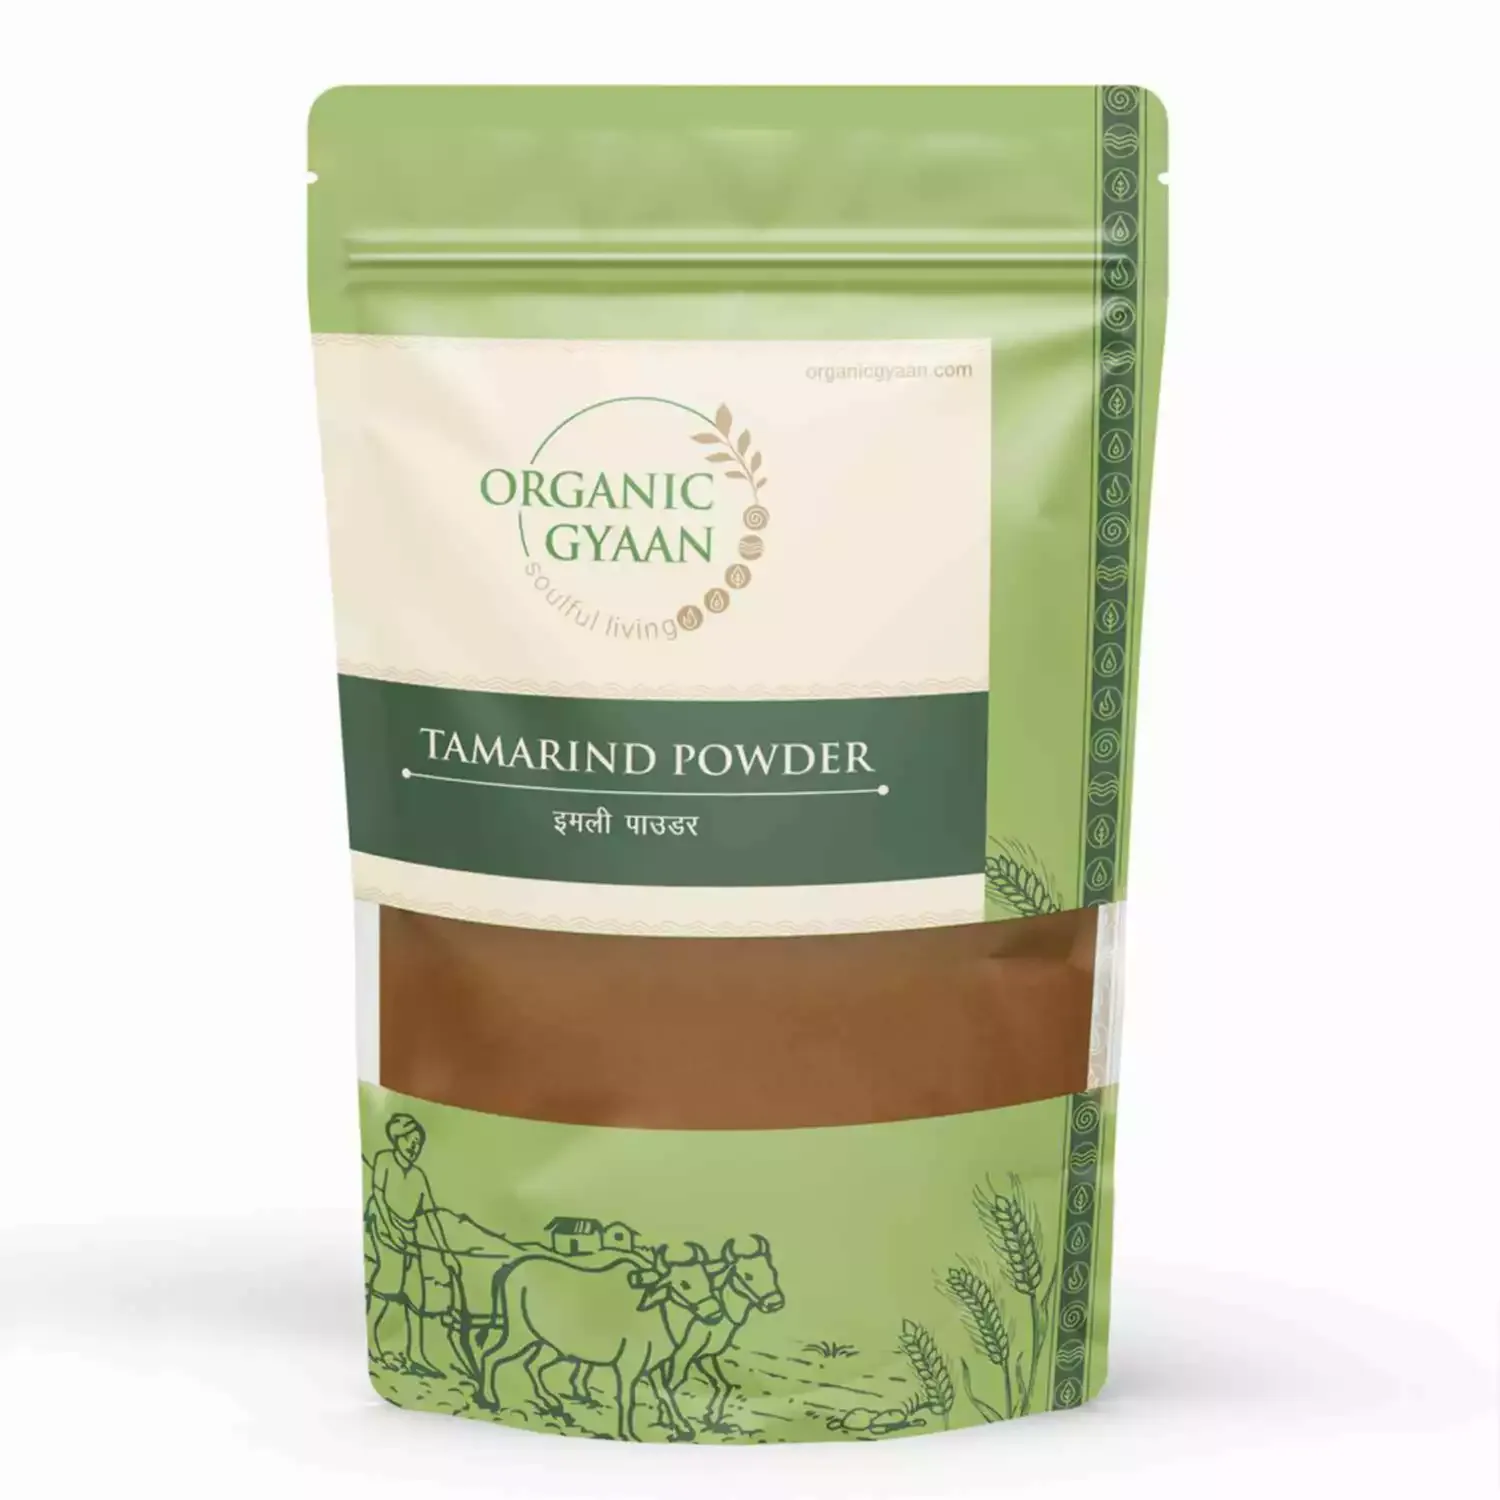 Organic Gyaan Imli Powder / Tamarind Powder (100 gms)